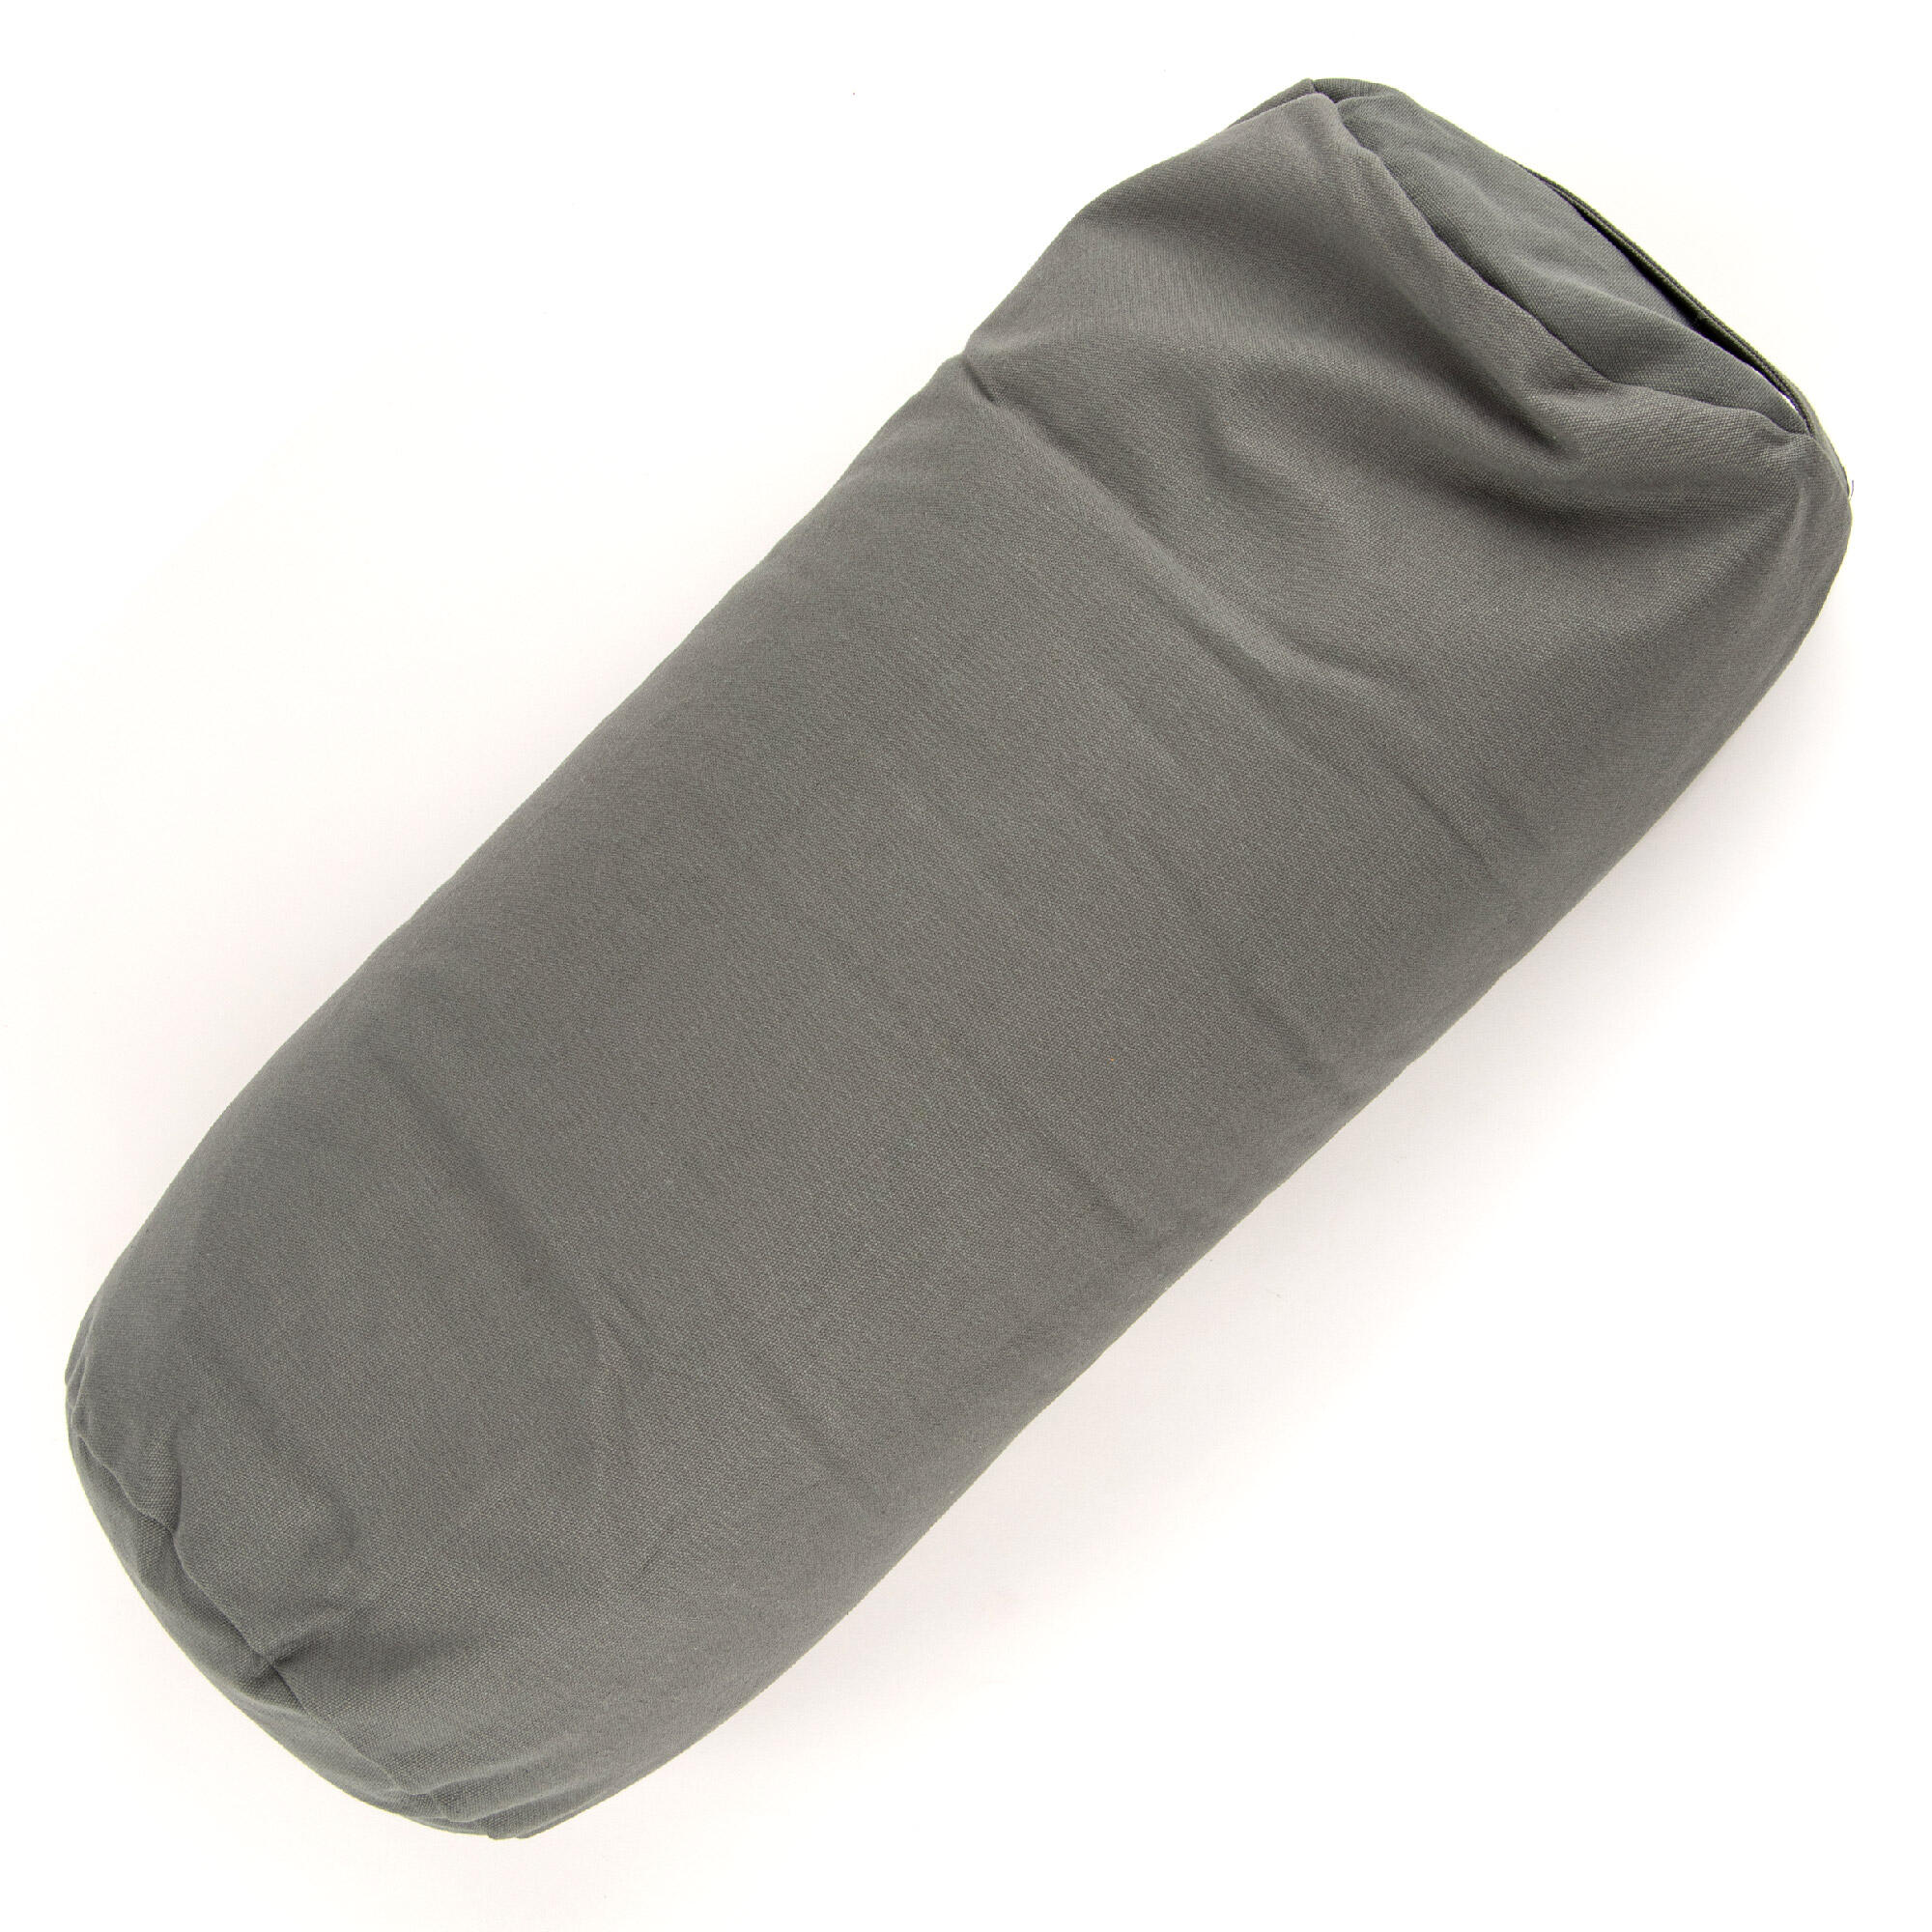 Myga Support Bolster Pillow - Grey 1/8